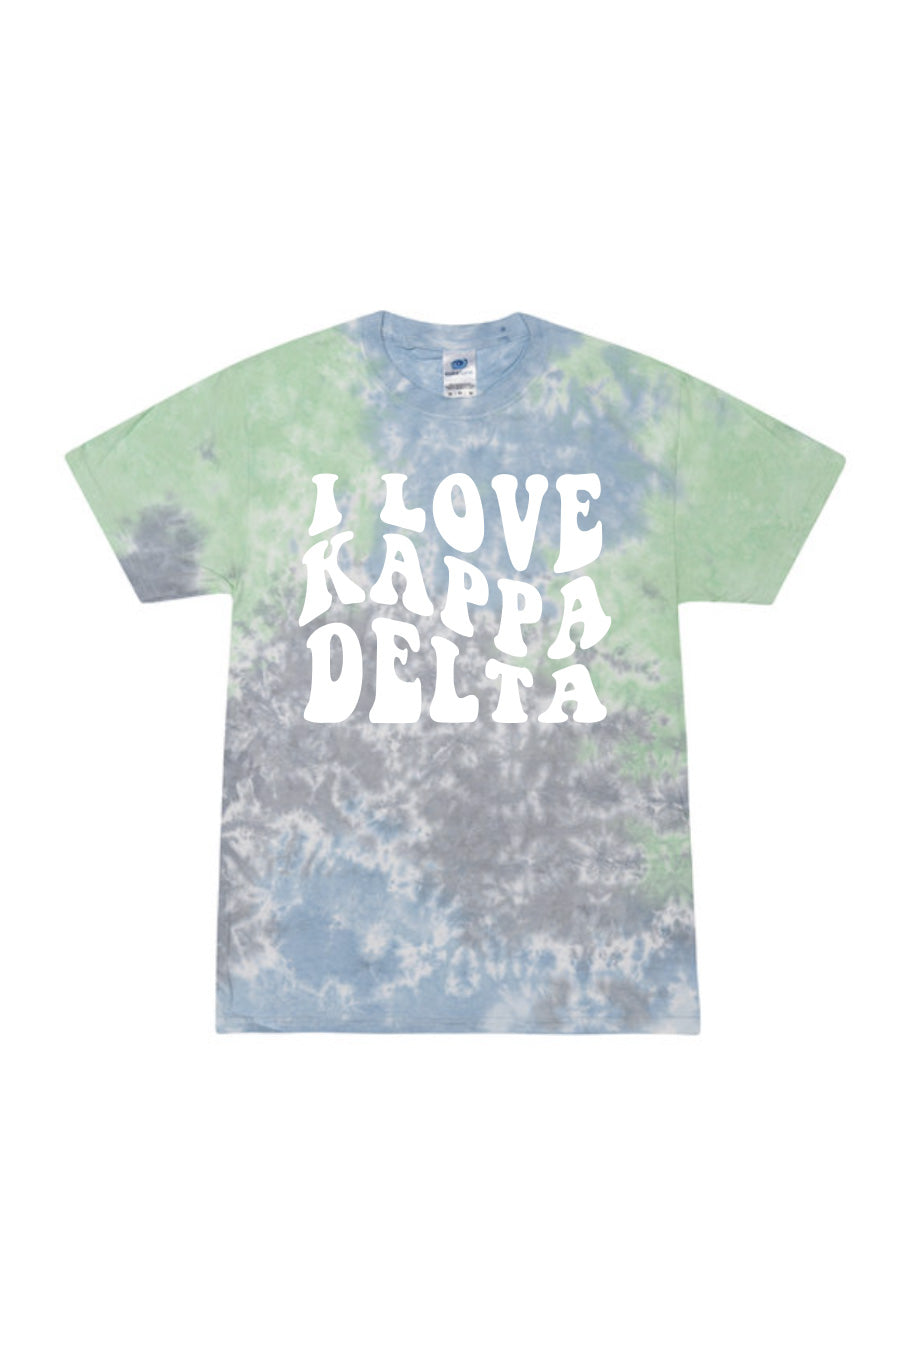 Sera I love Kappa Delta Tee